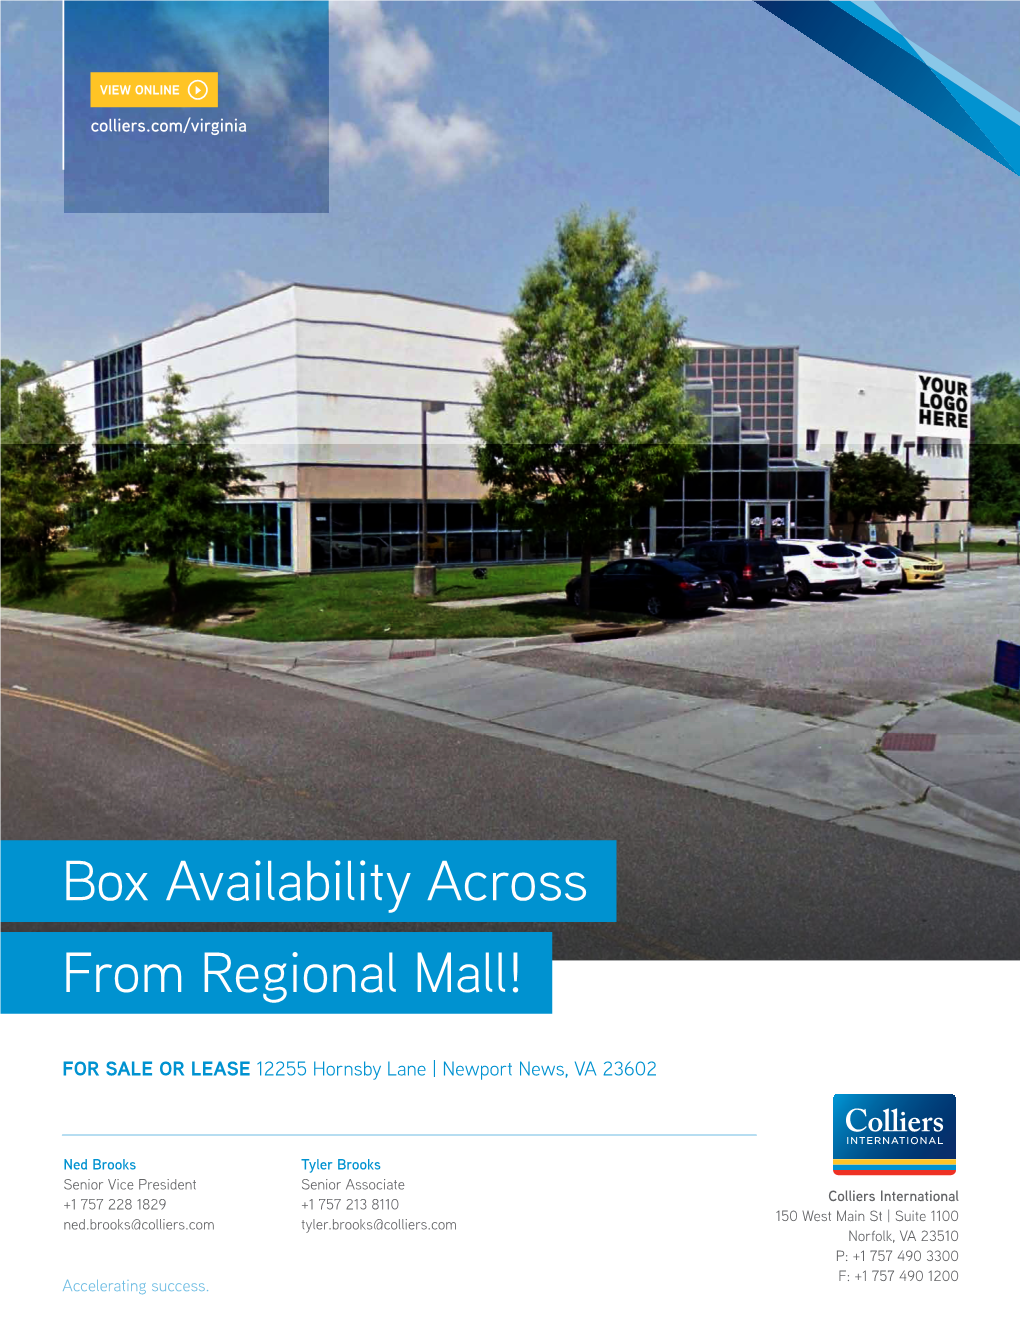 Box Availability Across from Regional Mall!